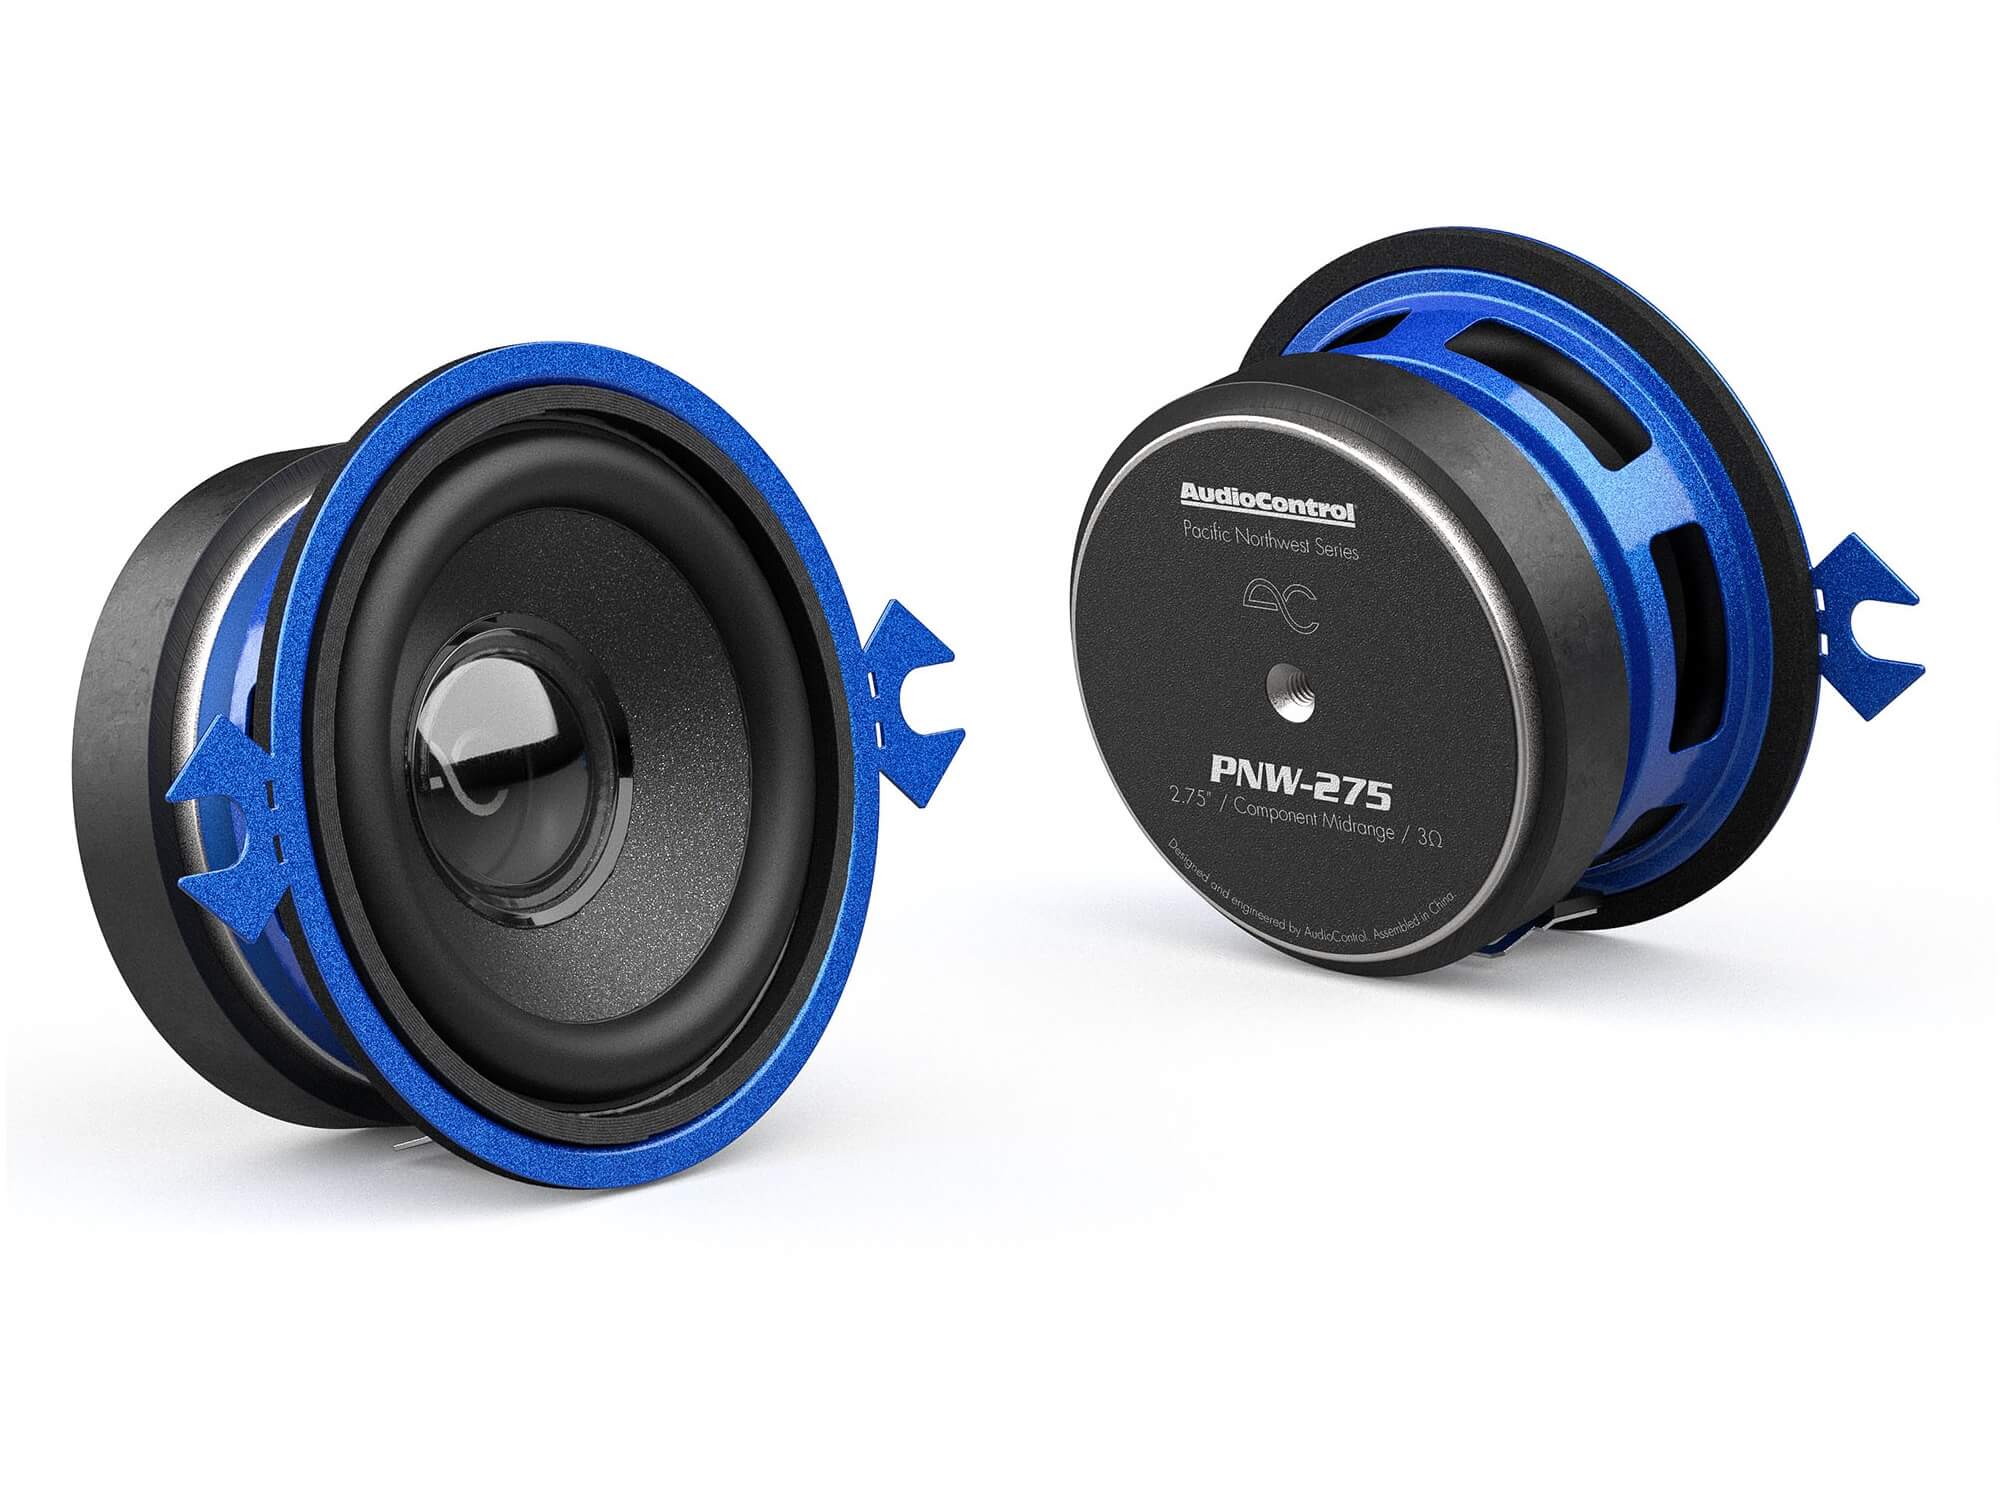 AudioControl PNW-275 - 2.75-Inch Component Speakers